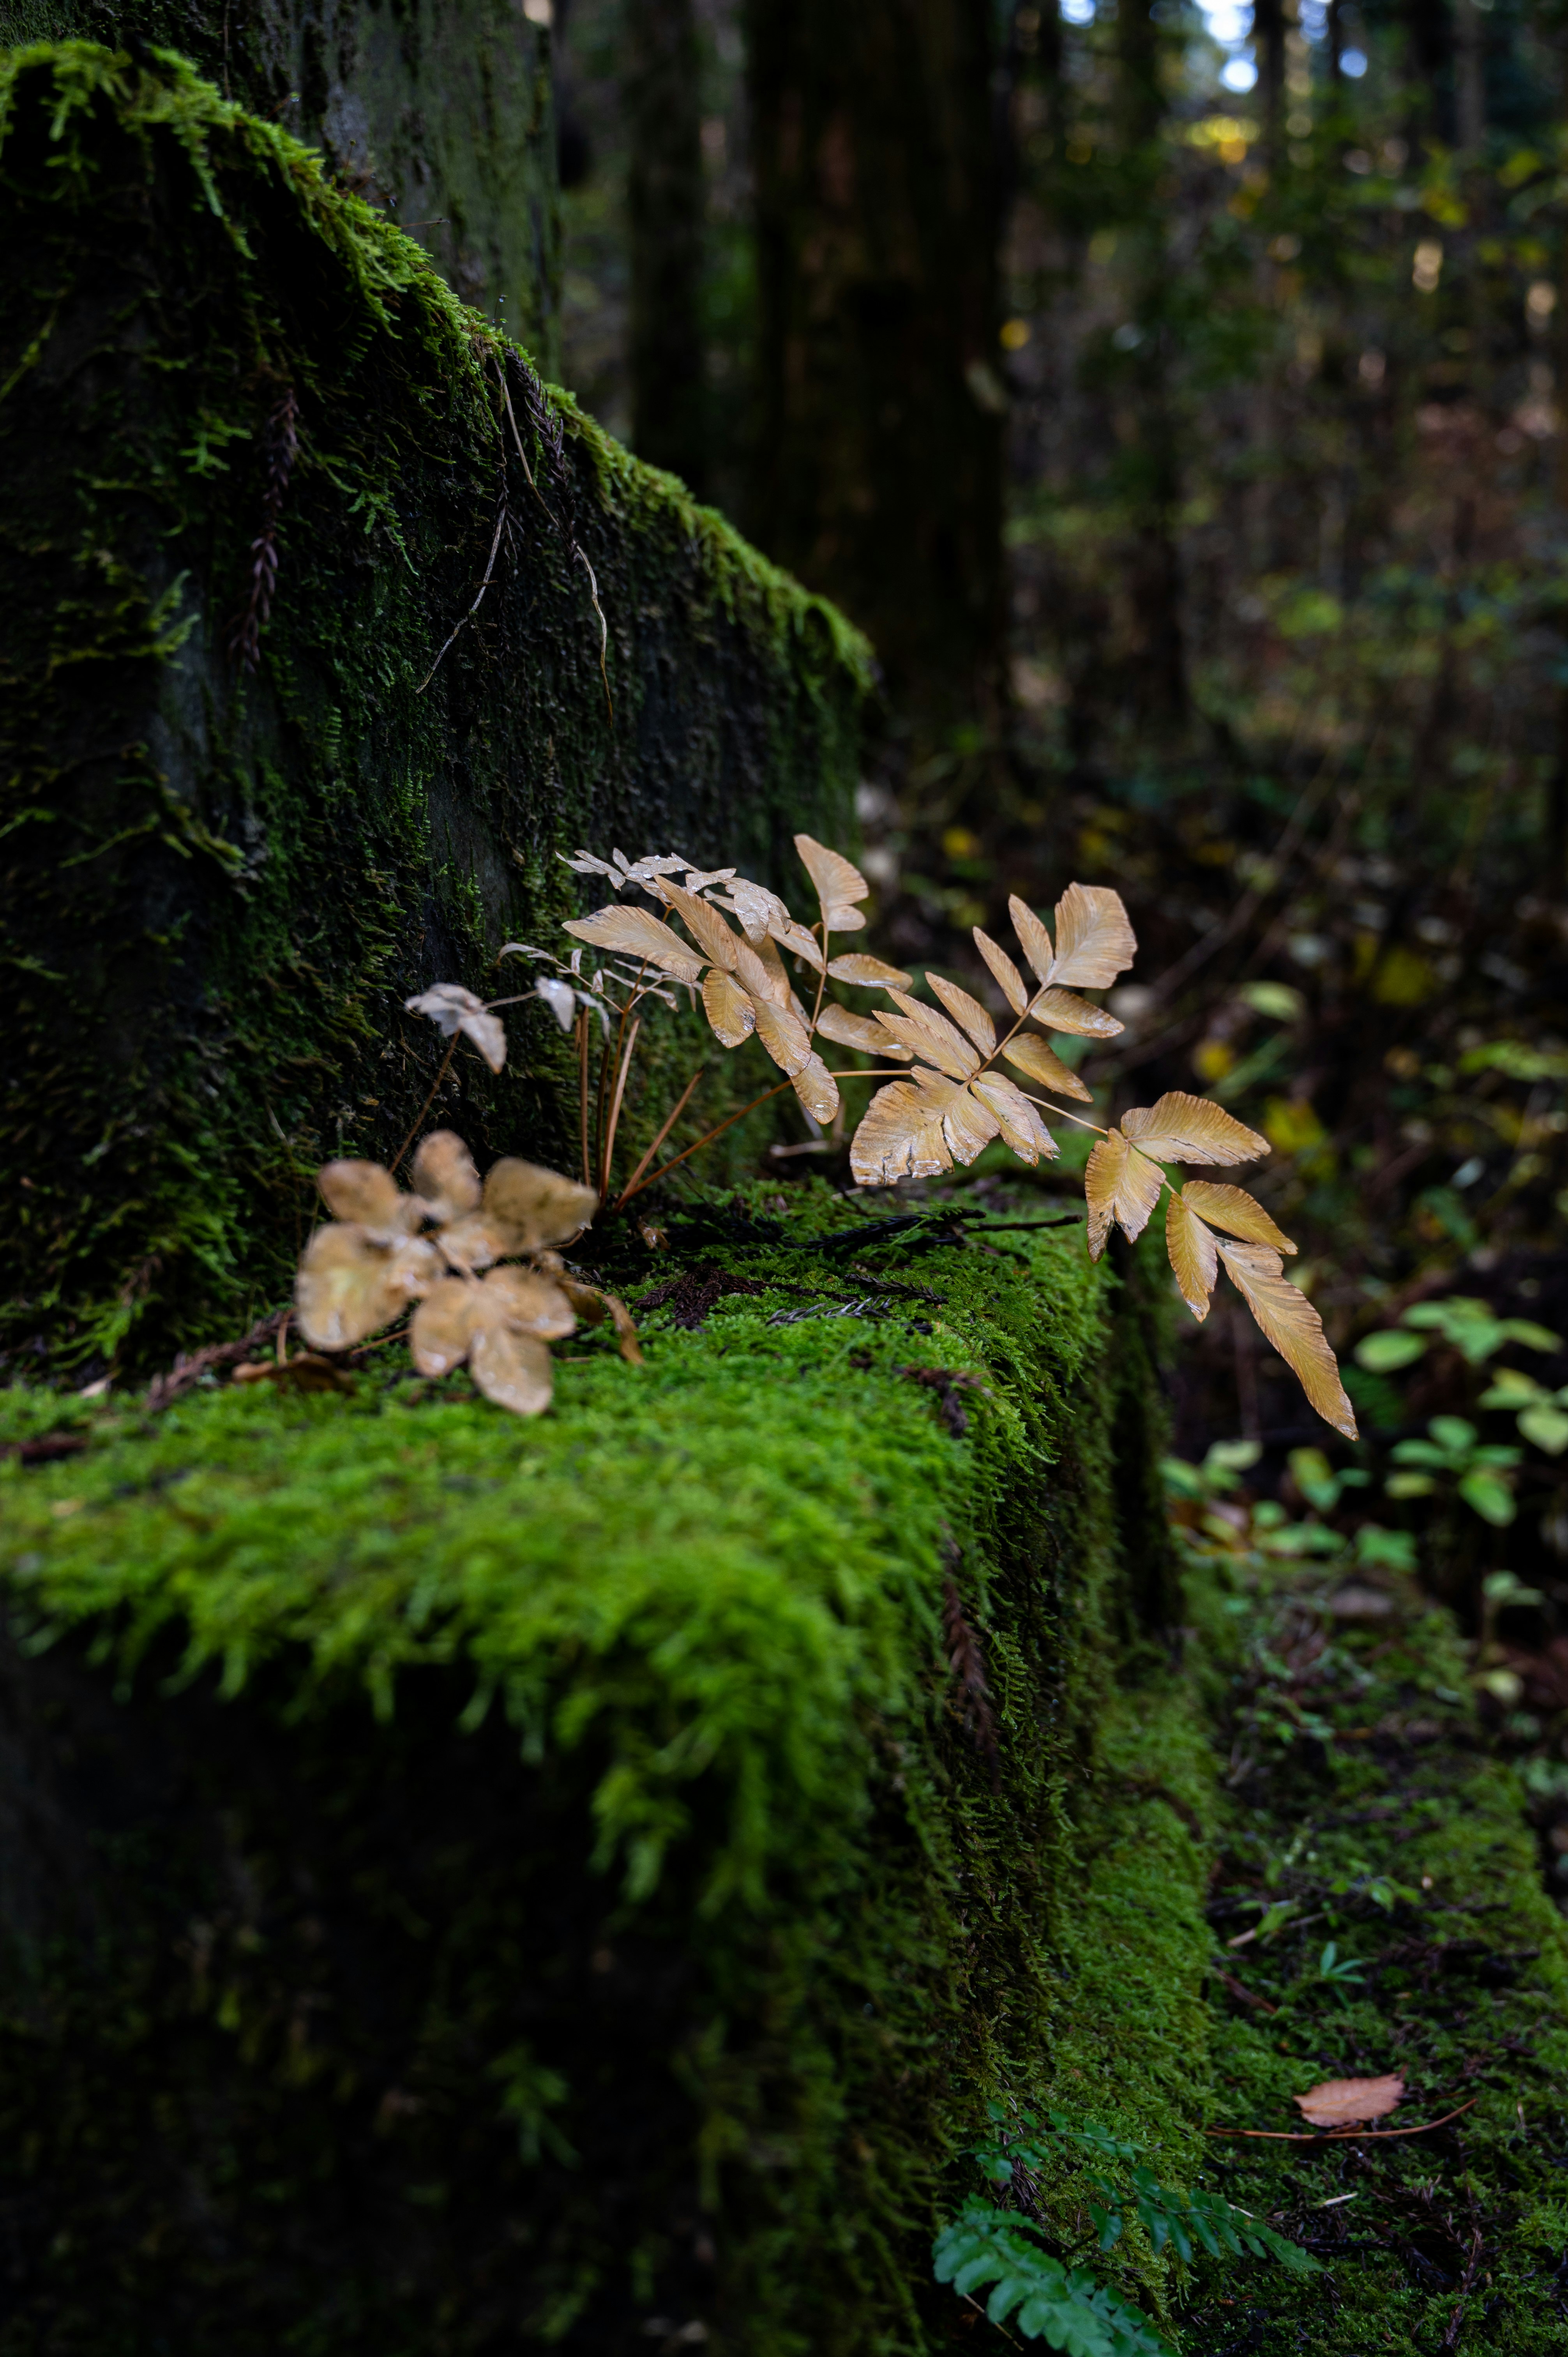 brown mushrooms on green moss